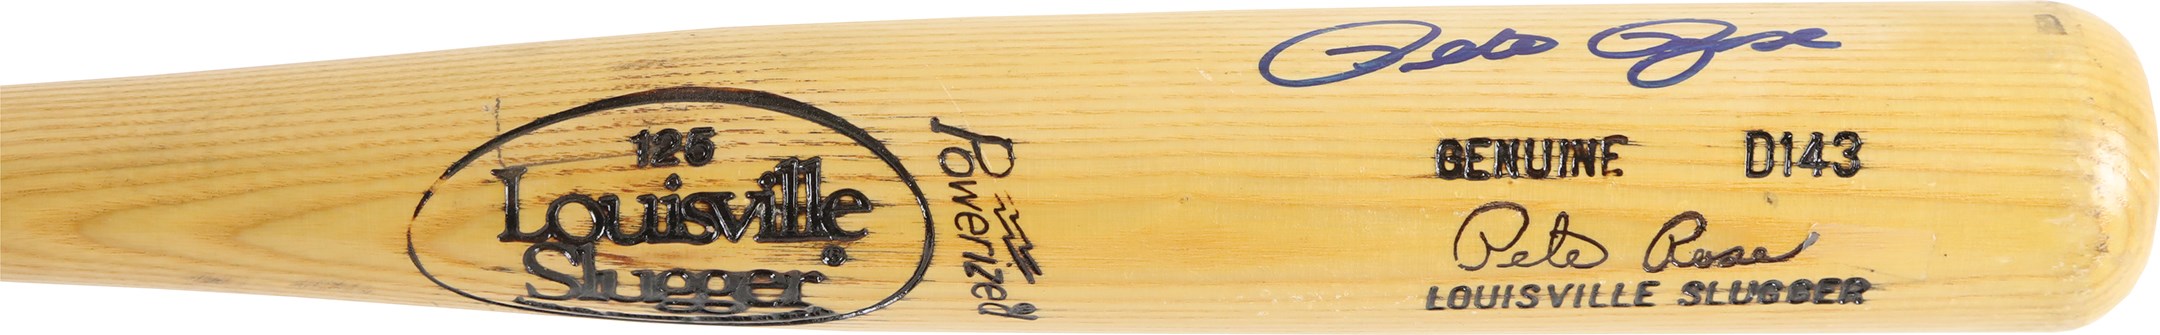 Baseball Autographs - Pete Rose Signed Pro Model Bat